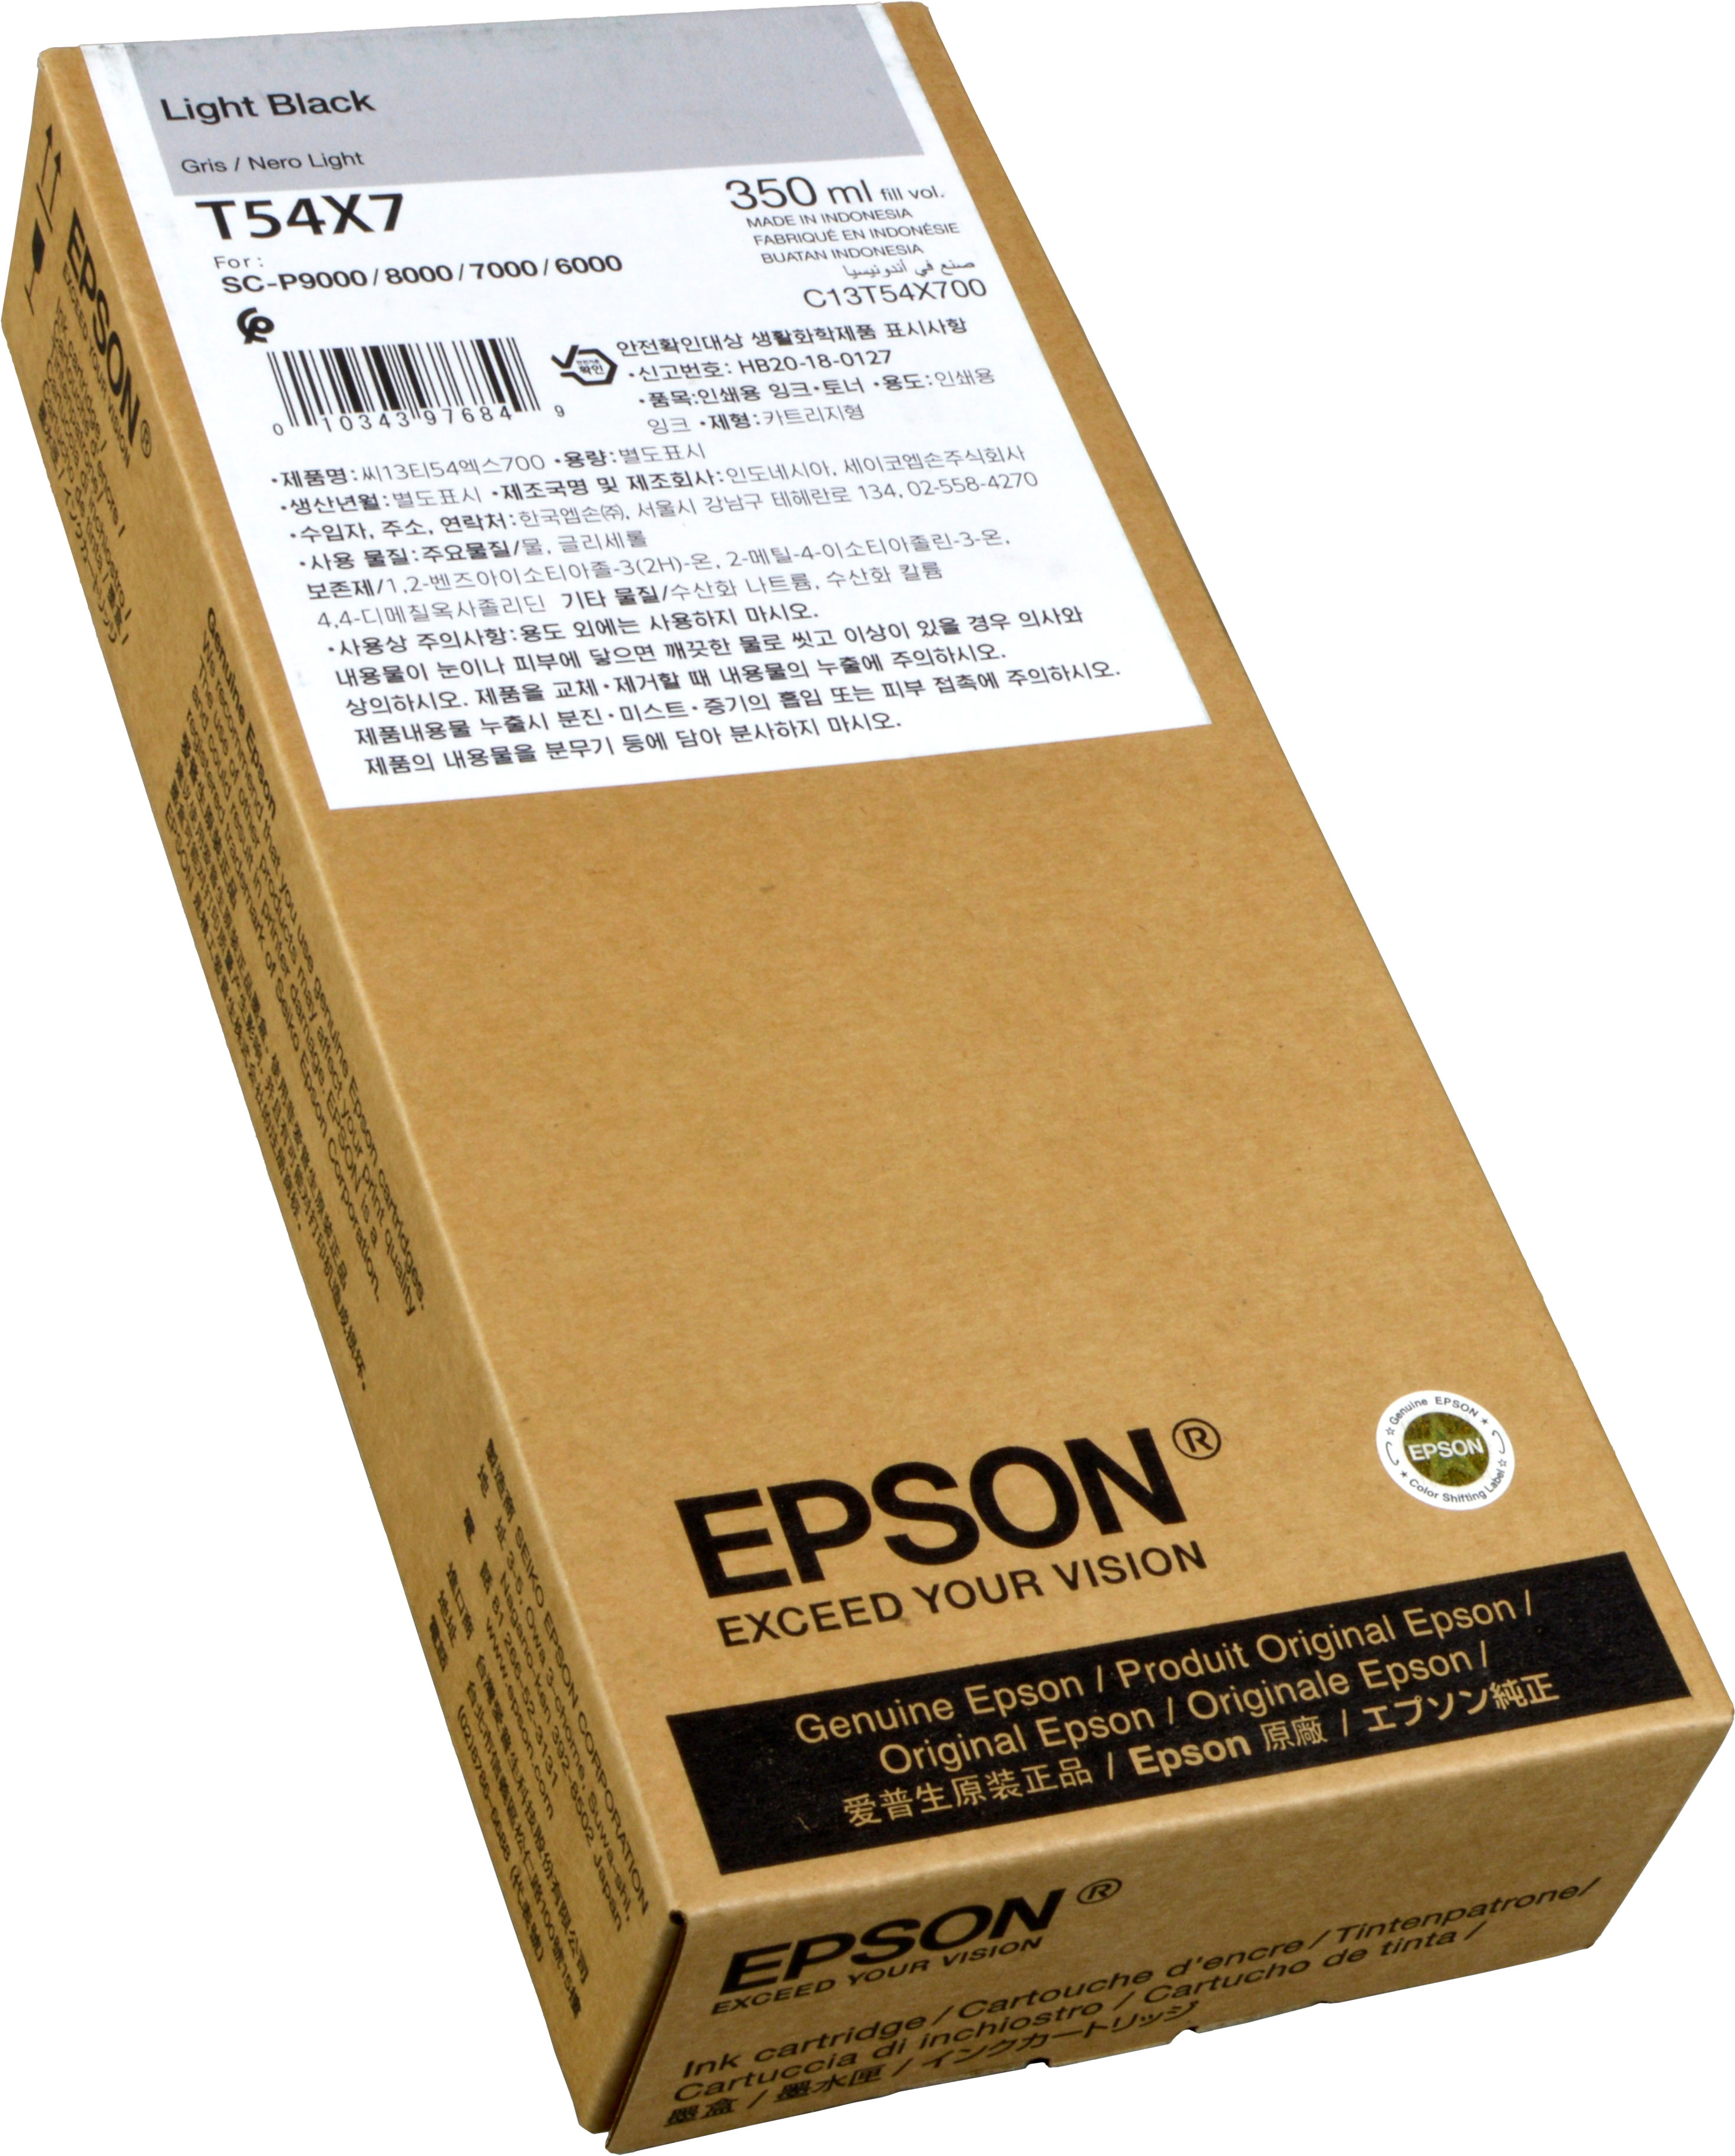 Epson Tinte C13T54X700  light black T54X7